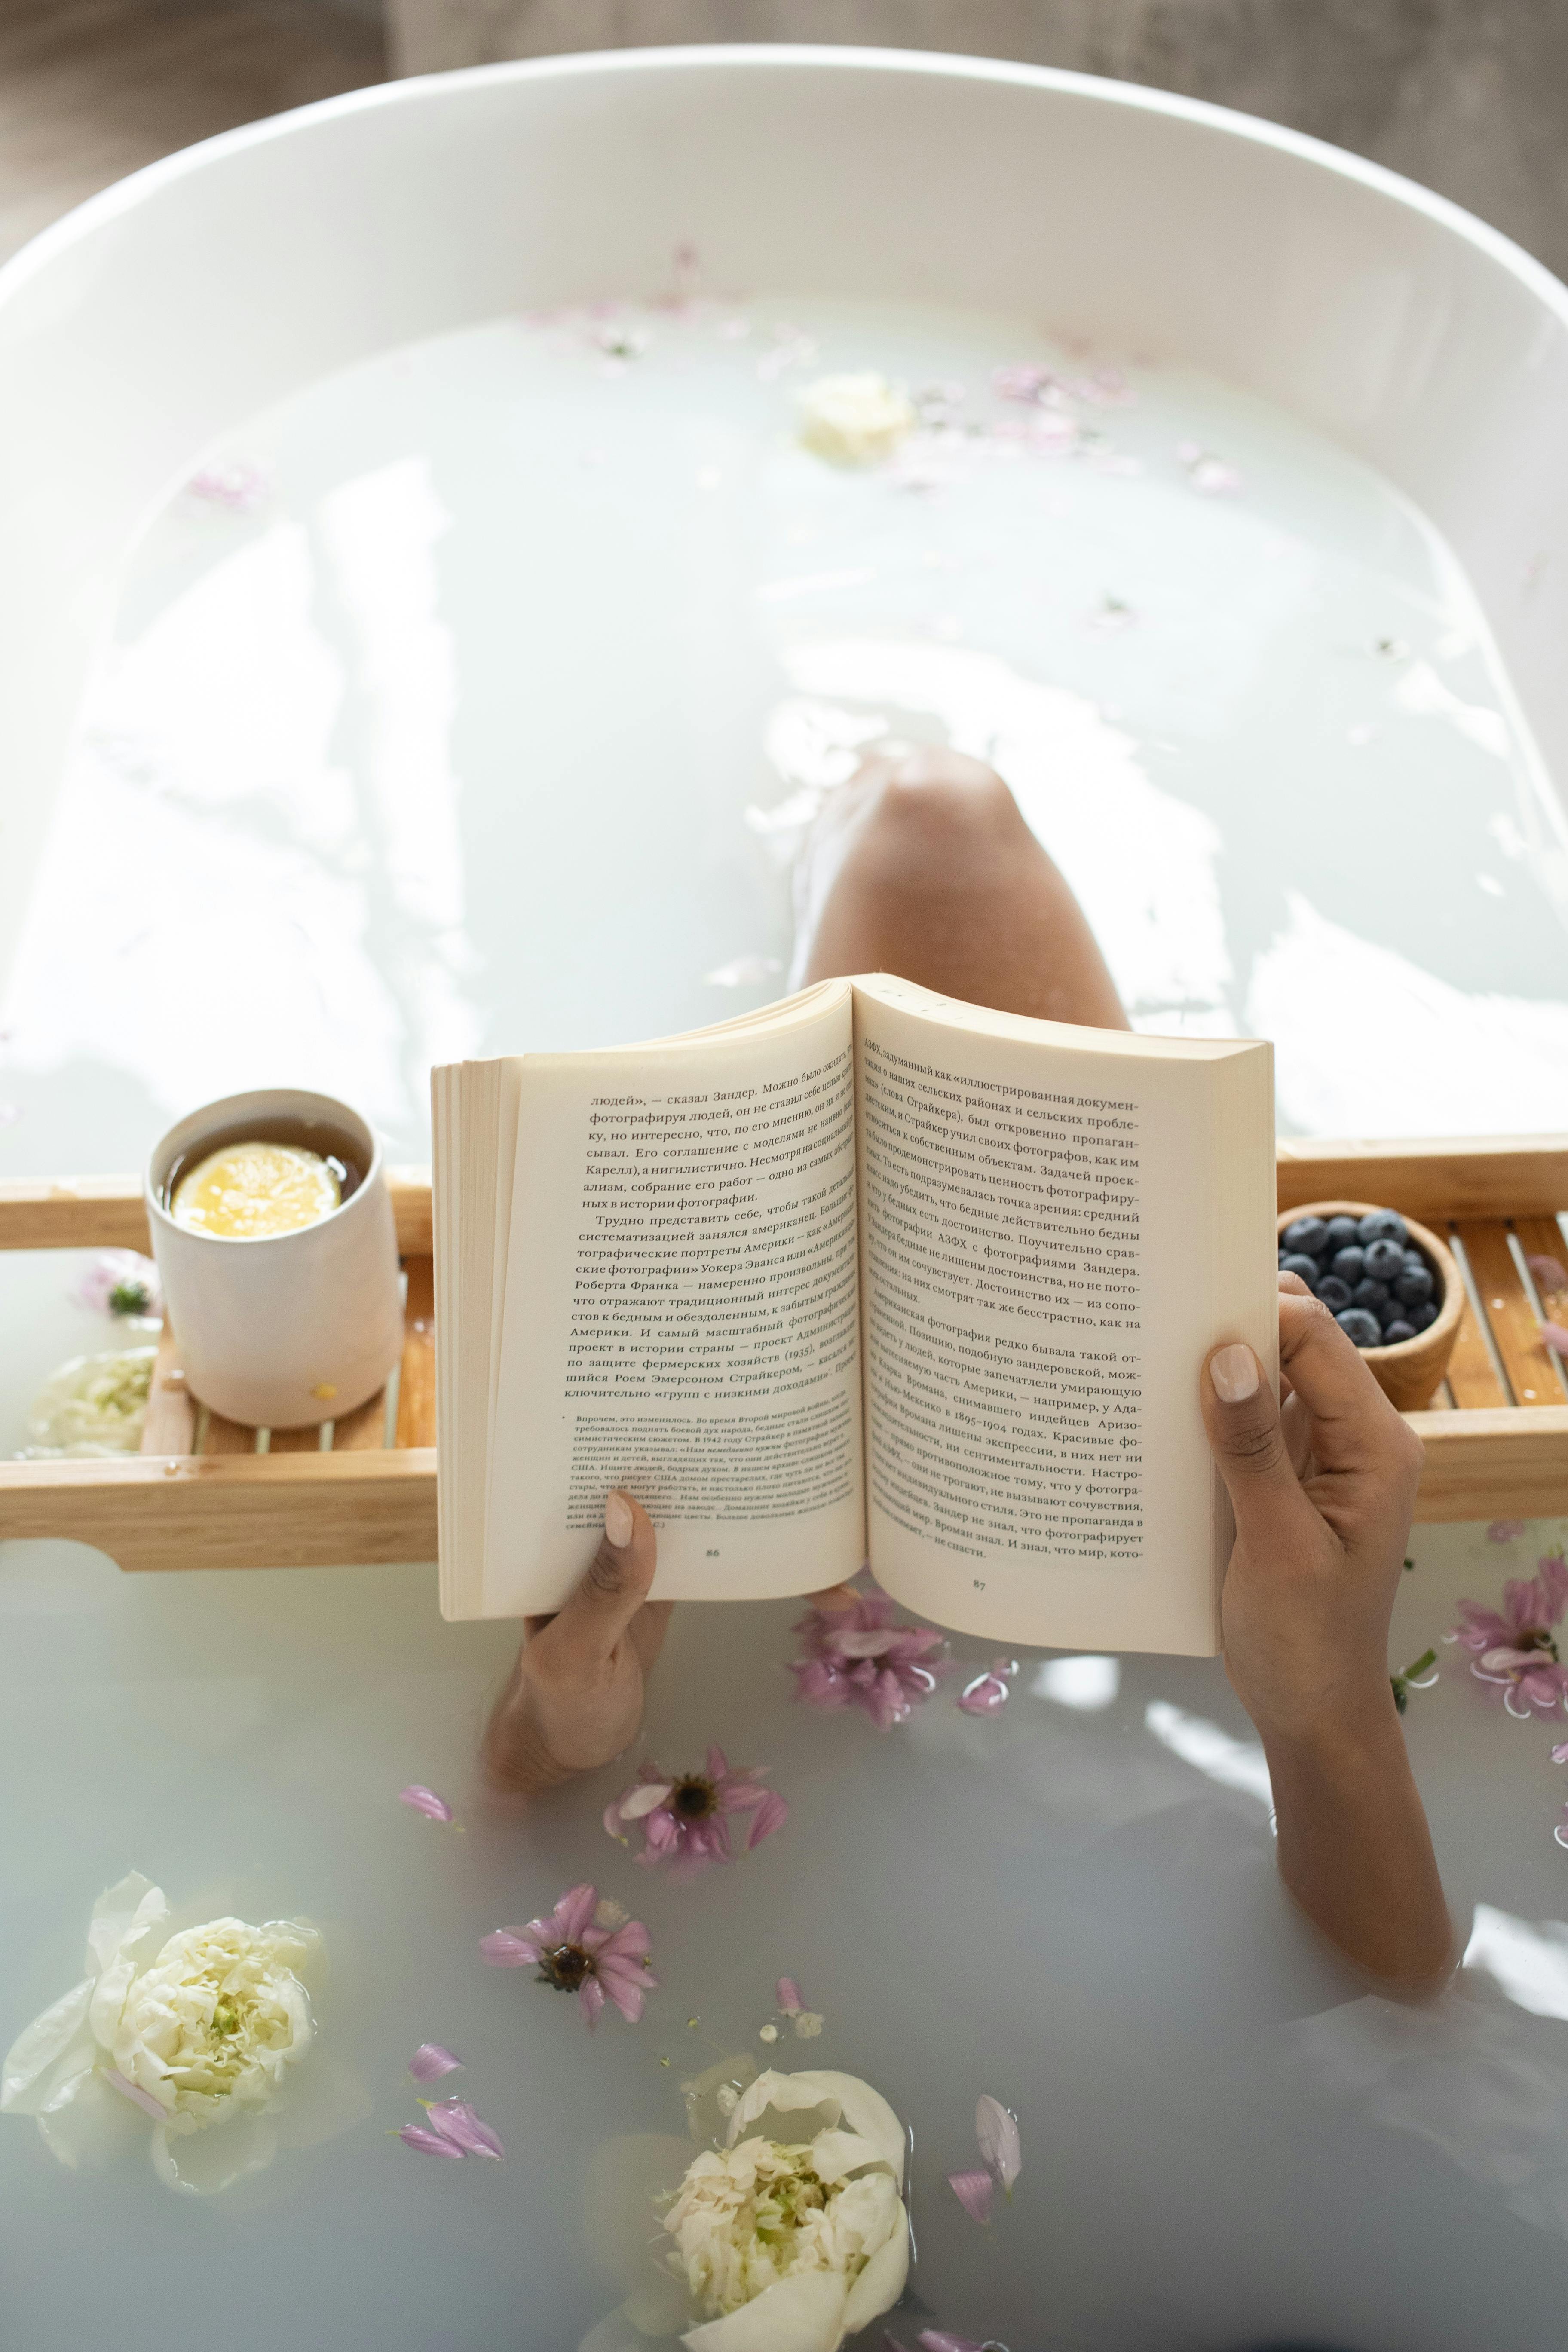 A woman reading a book in a bath tub during a spa treatment | Source: Pexels